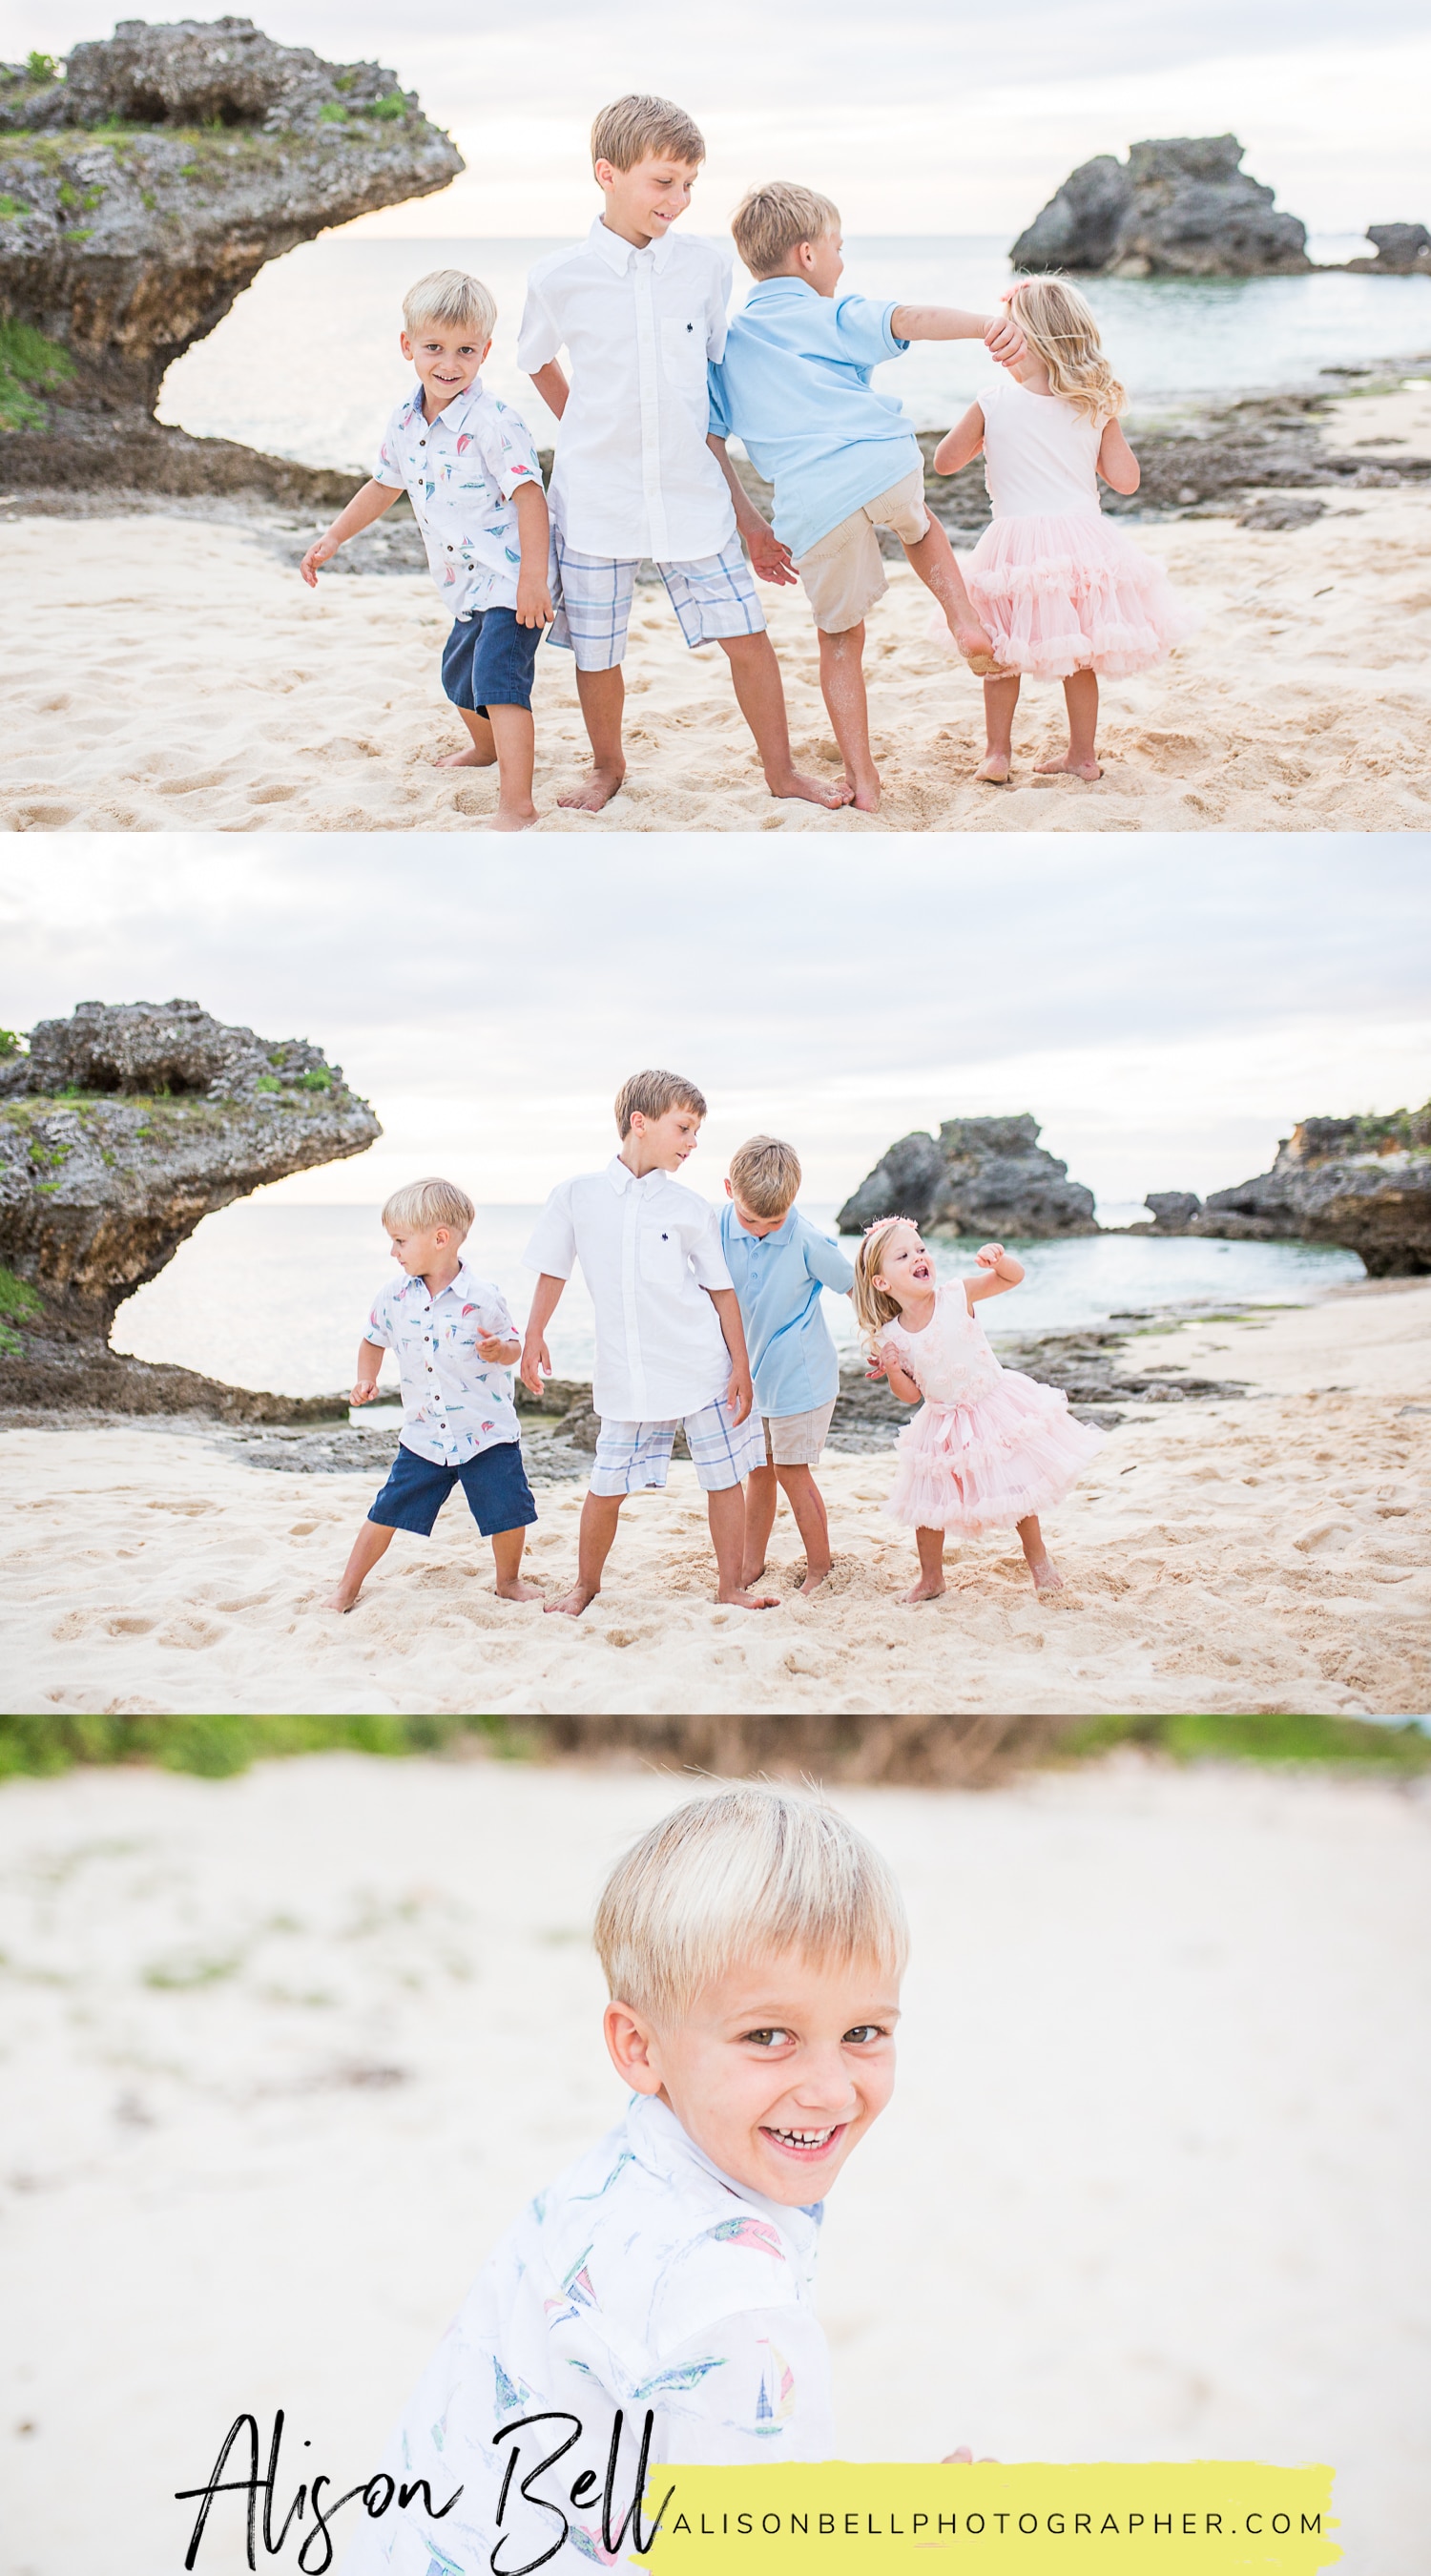 Big family, young kids family photo session by Alison Bell, Photographer. #alisonbellphotog alisonbellphotographer.com